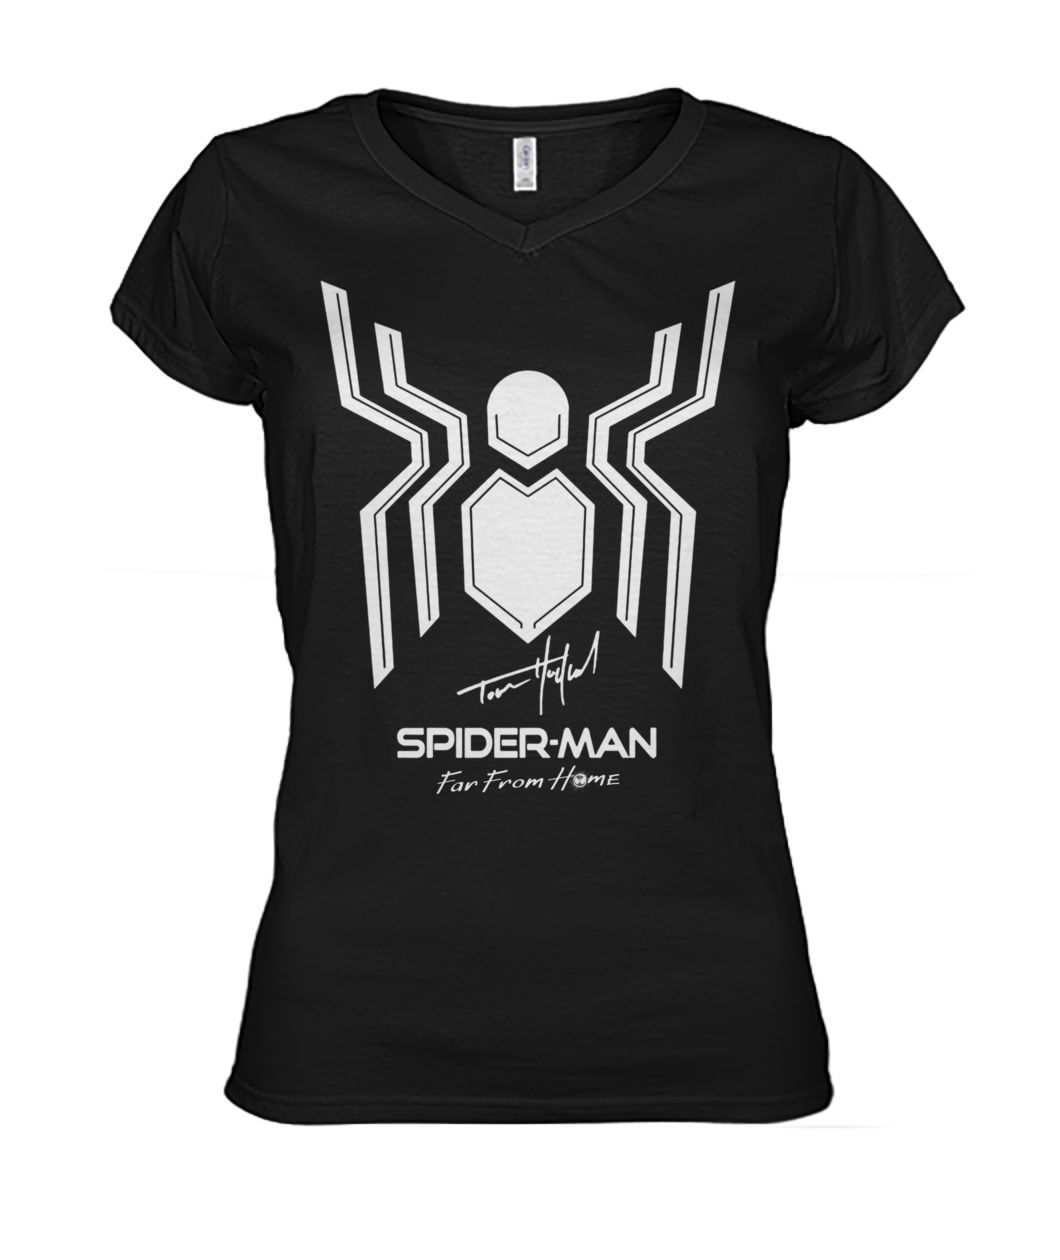 Spider-man far from home women's v-neck